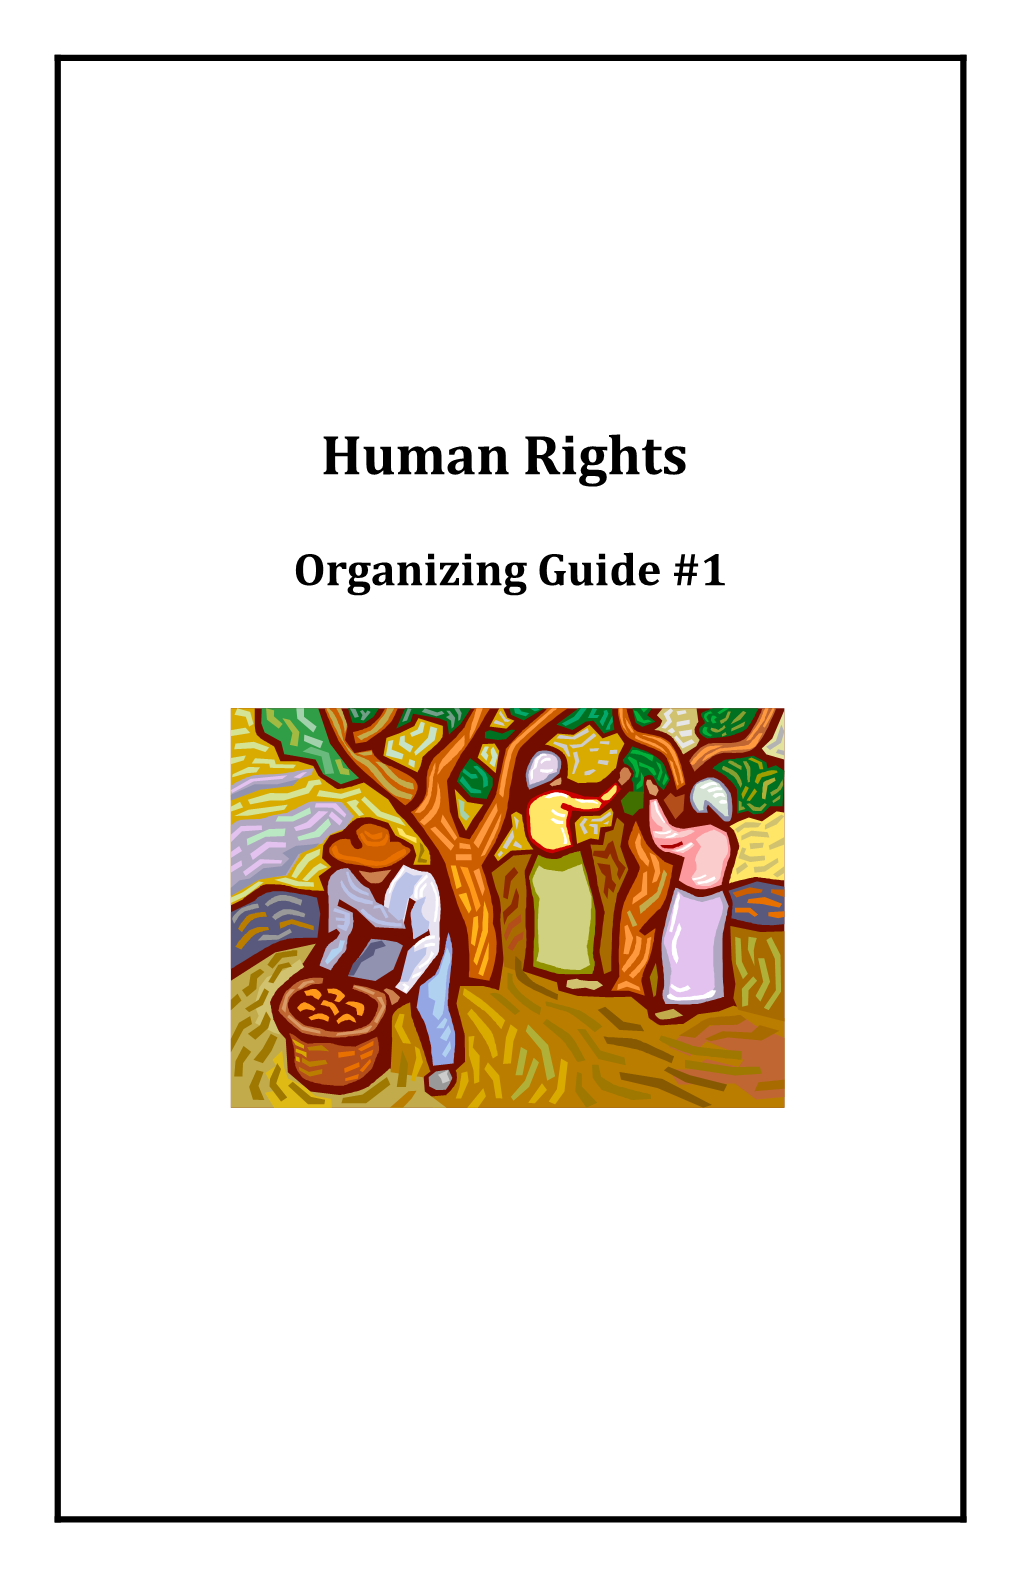 Organizing Guide #1